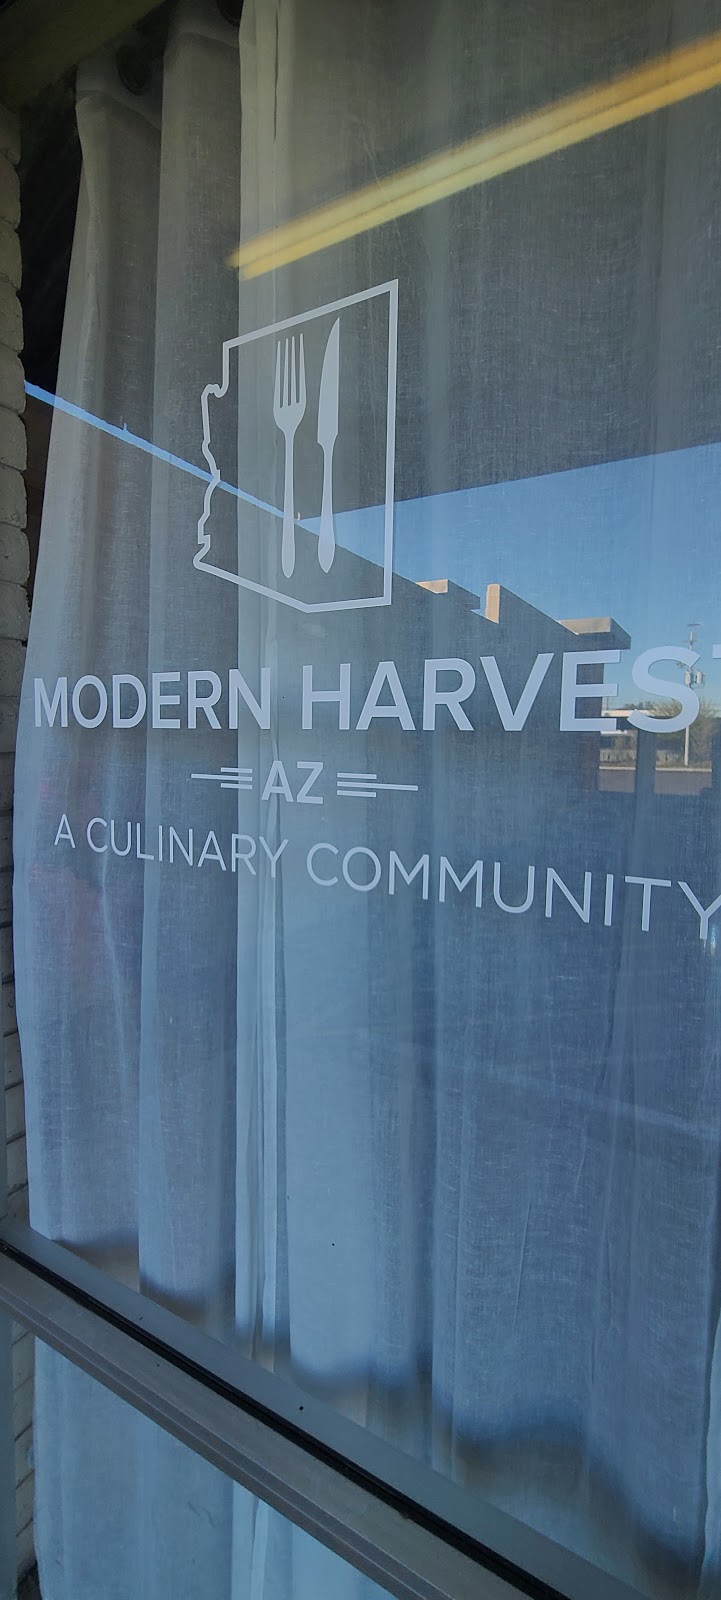 Modern Harvest "A Culinary Community" | restaurant | 6050 N 16th St, Phoenix, AZ 85016, USA | 4803327089 OR +1 480-332-7089